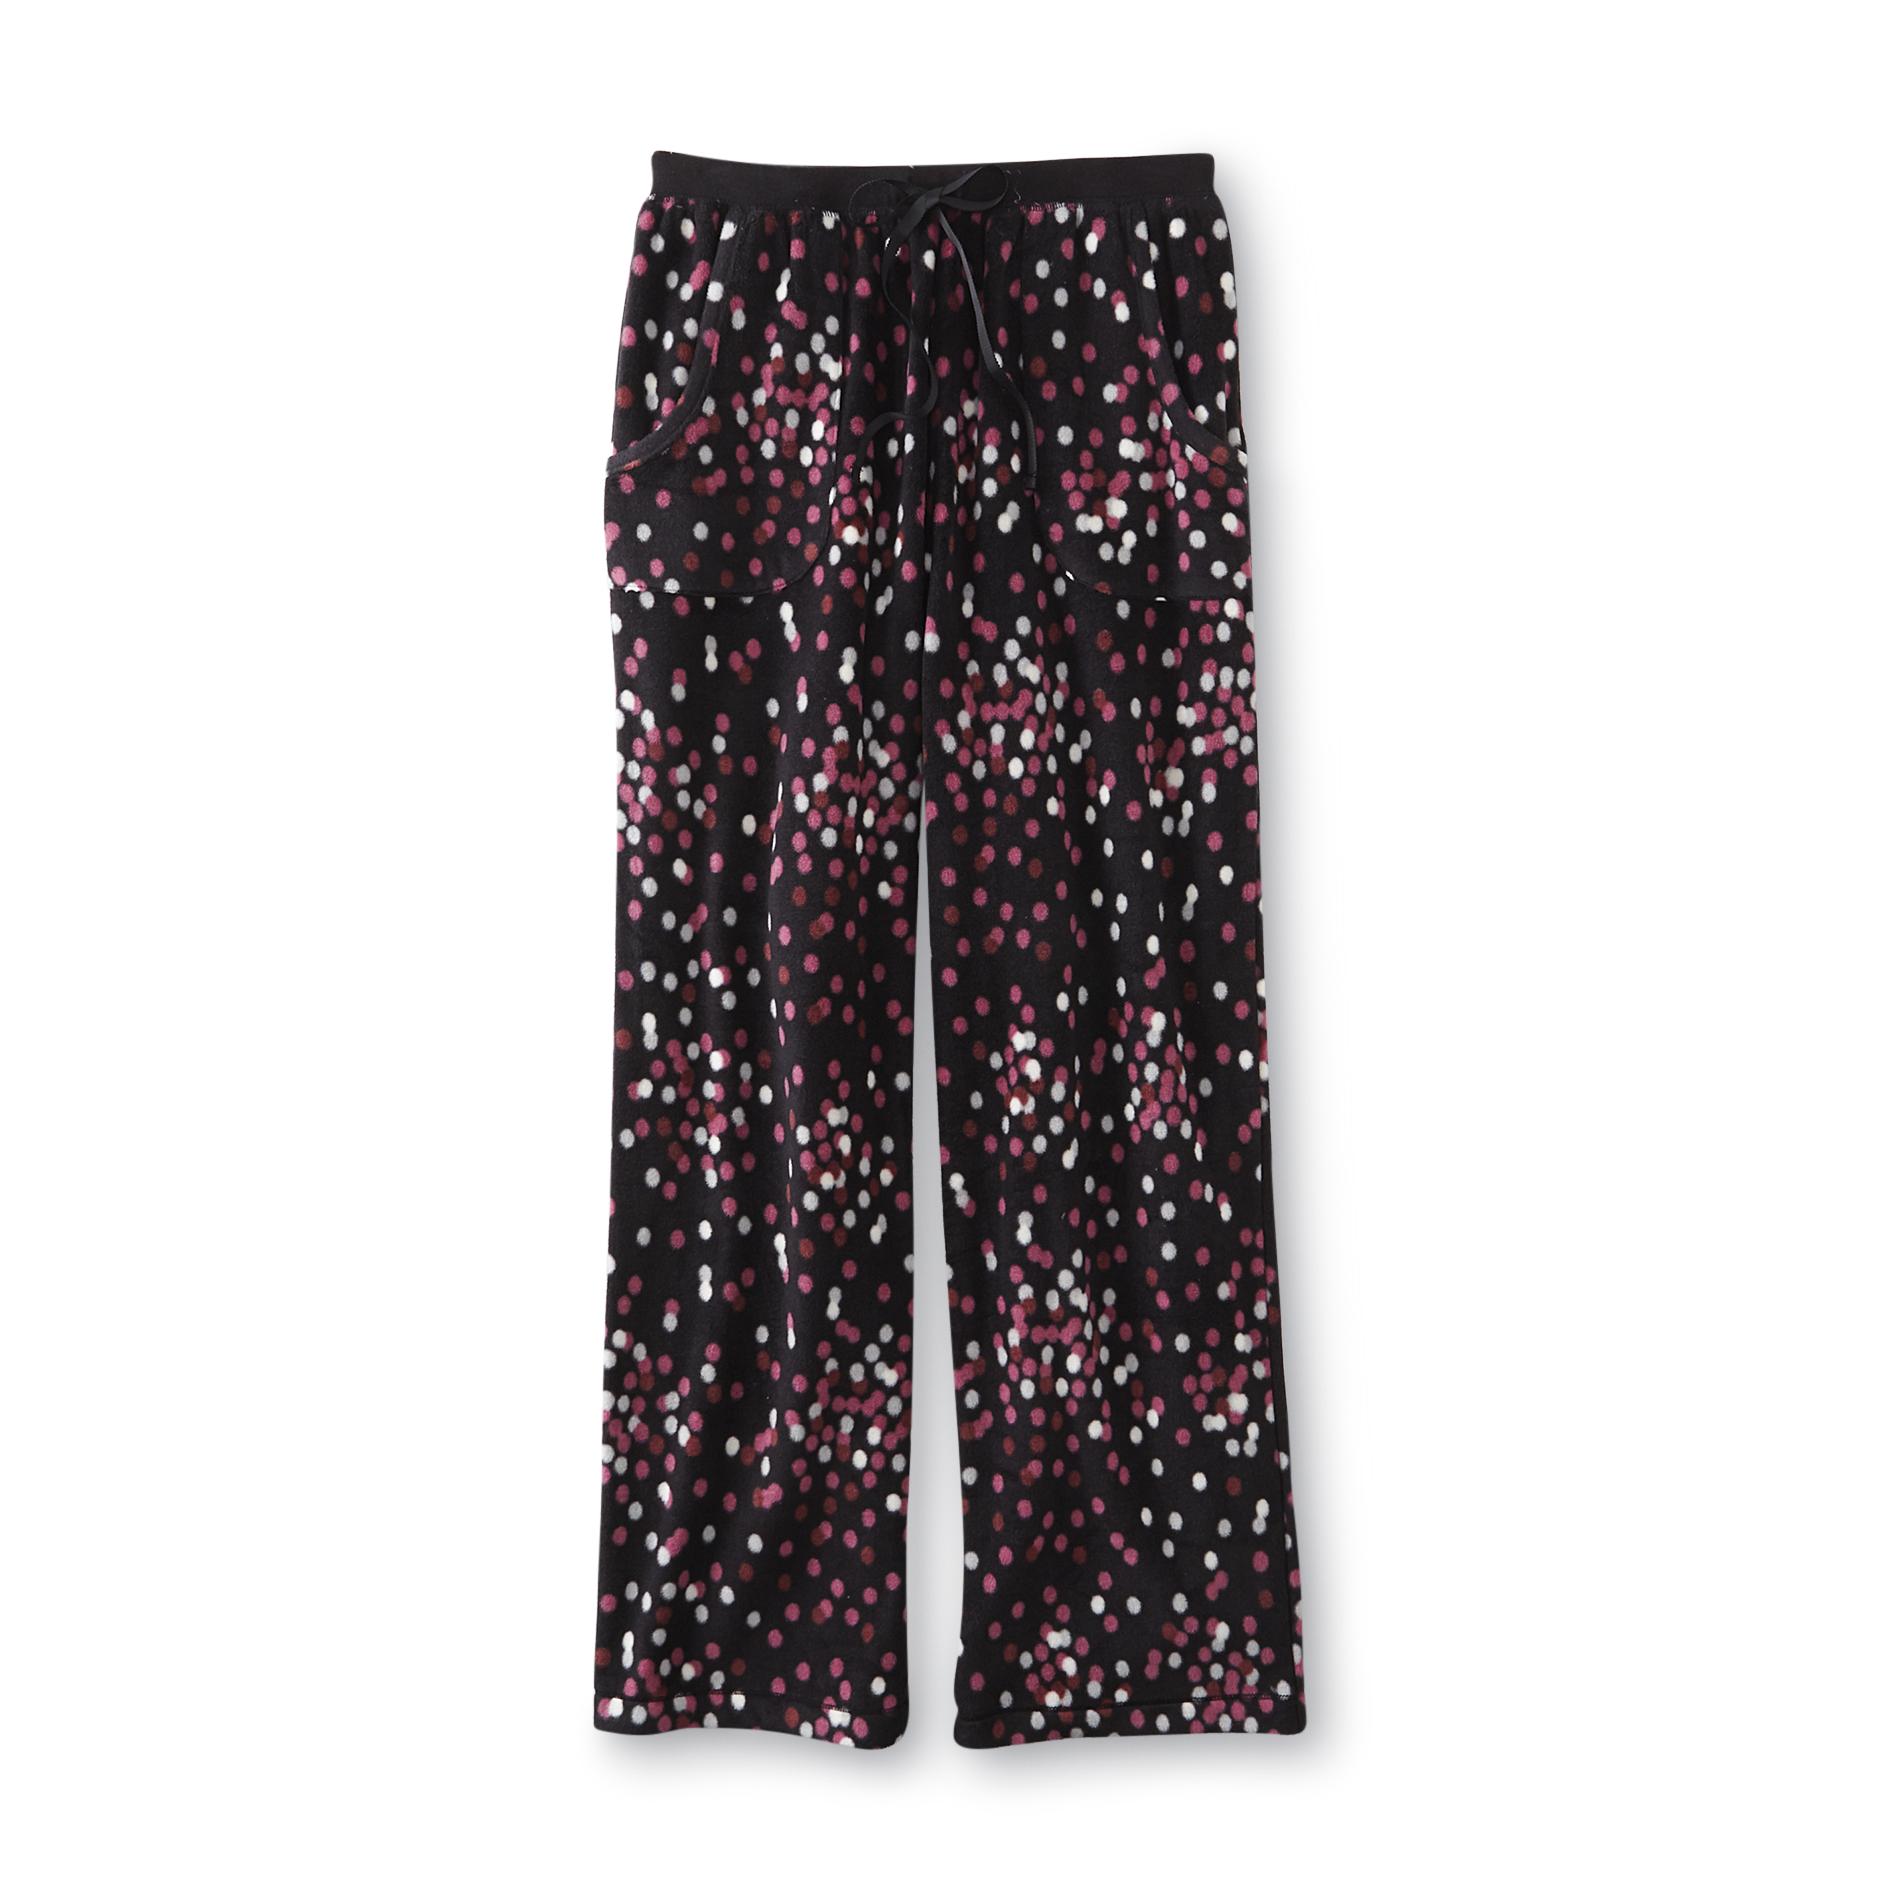 Laura Scott Women's Fleece Pajama Pants - Polka Dot